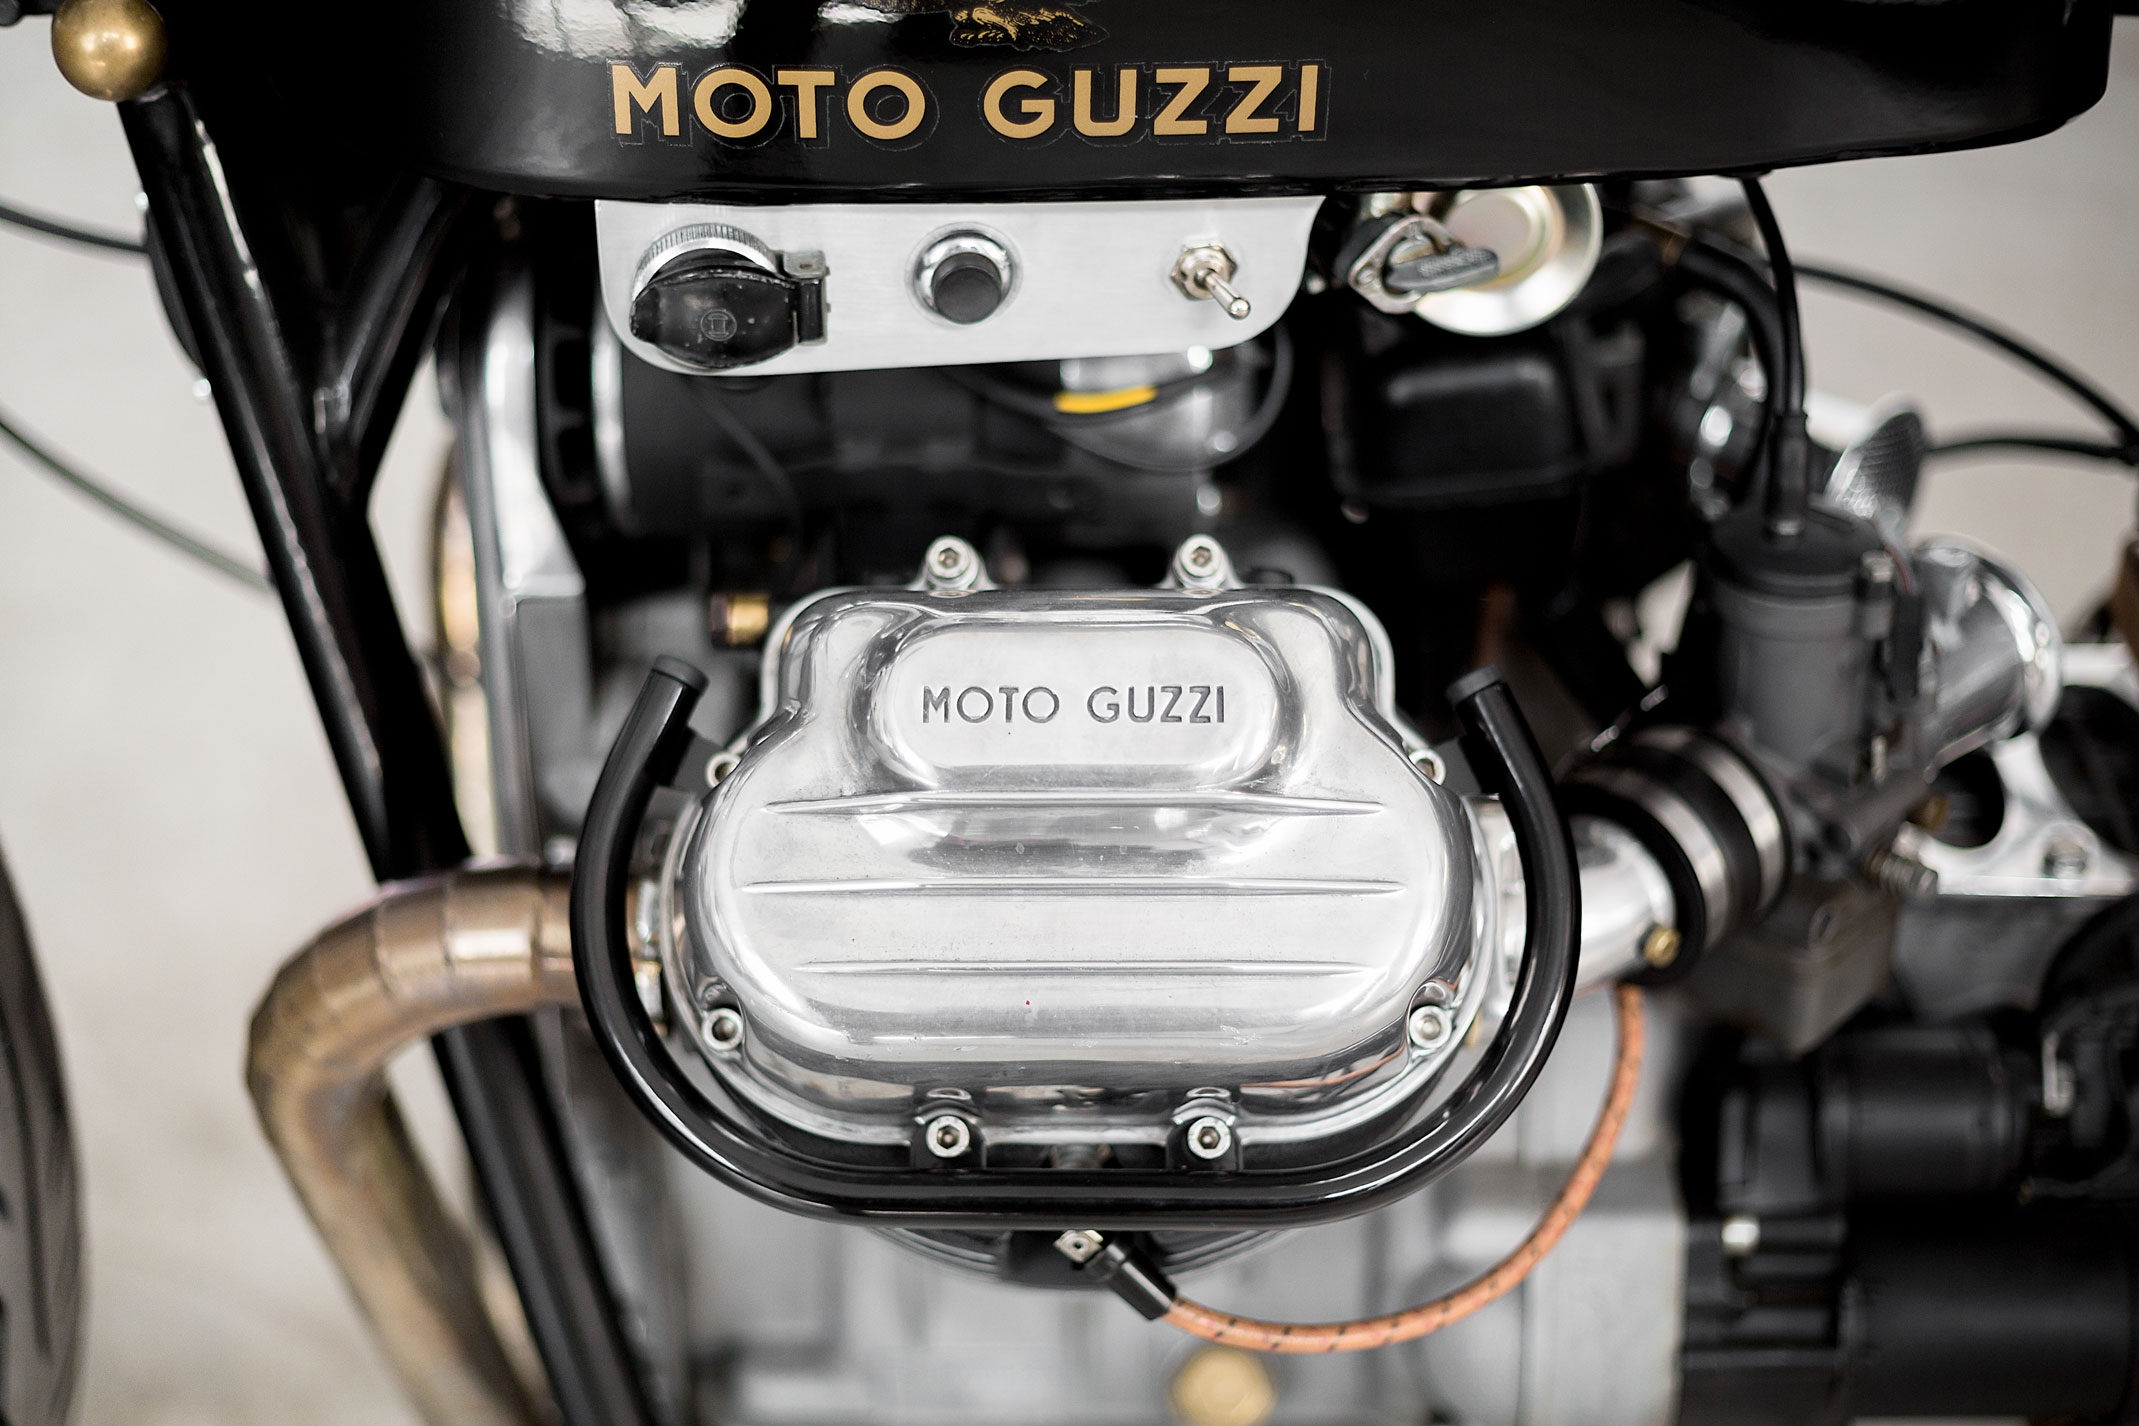 Route Fiere, vintage Moto Guzzi V7 engine